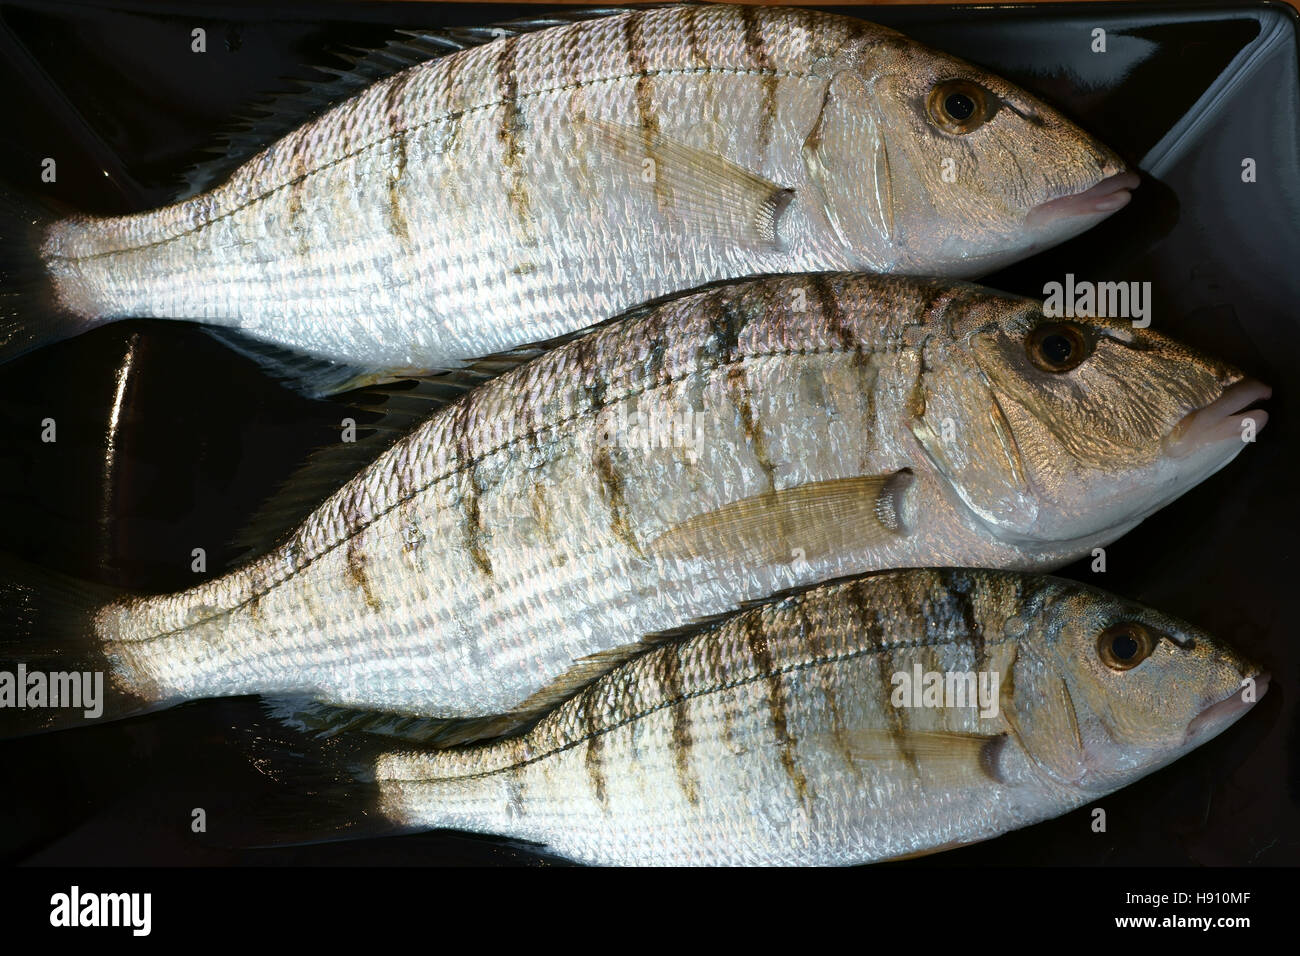 Mormoras Lithognatus Mormyrus Mormora Pesce Fisch essen rohen Bio Mare Aperto Dieta meediterranea Stockfoto